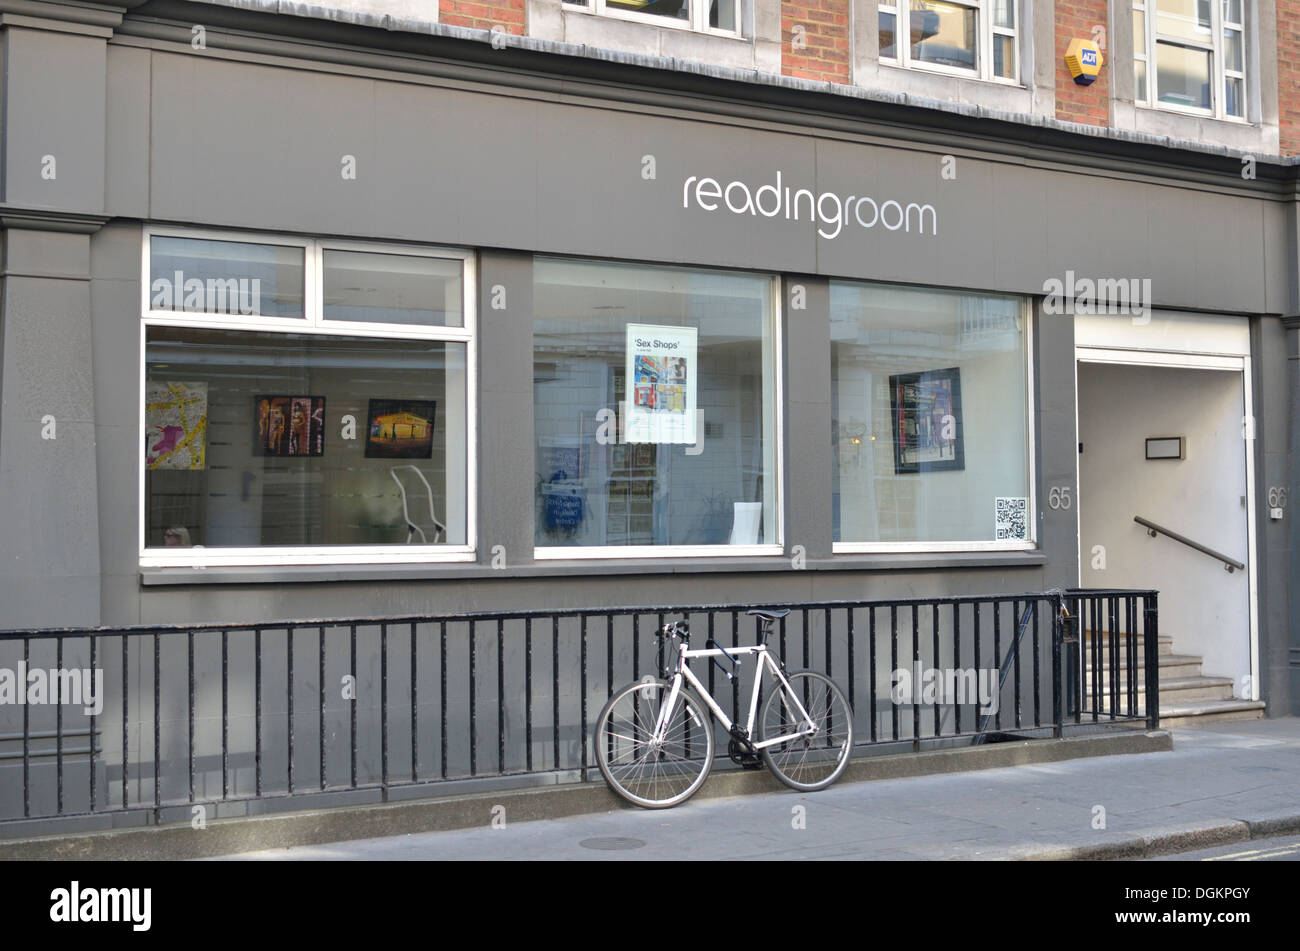 Readingroom Gallery on Frith Street. Stock Photo